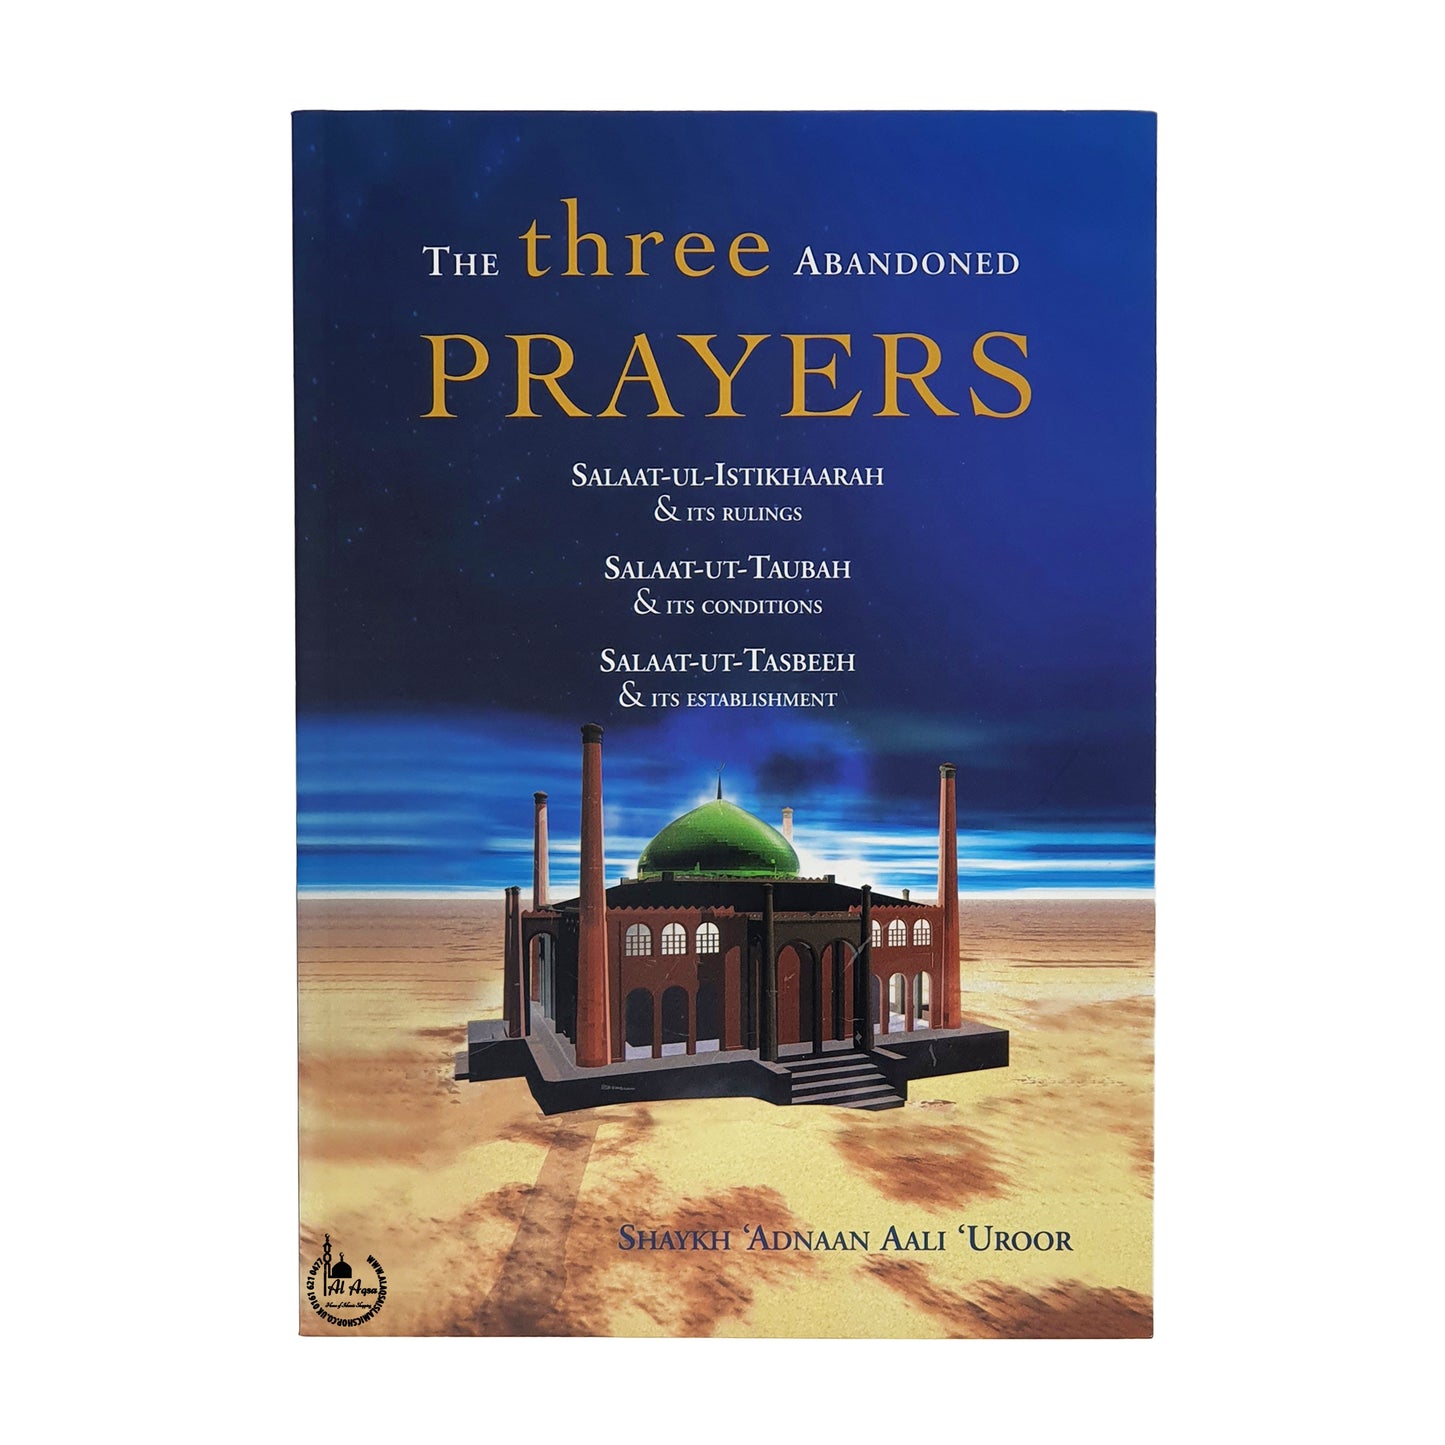 The three abandoned prayers